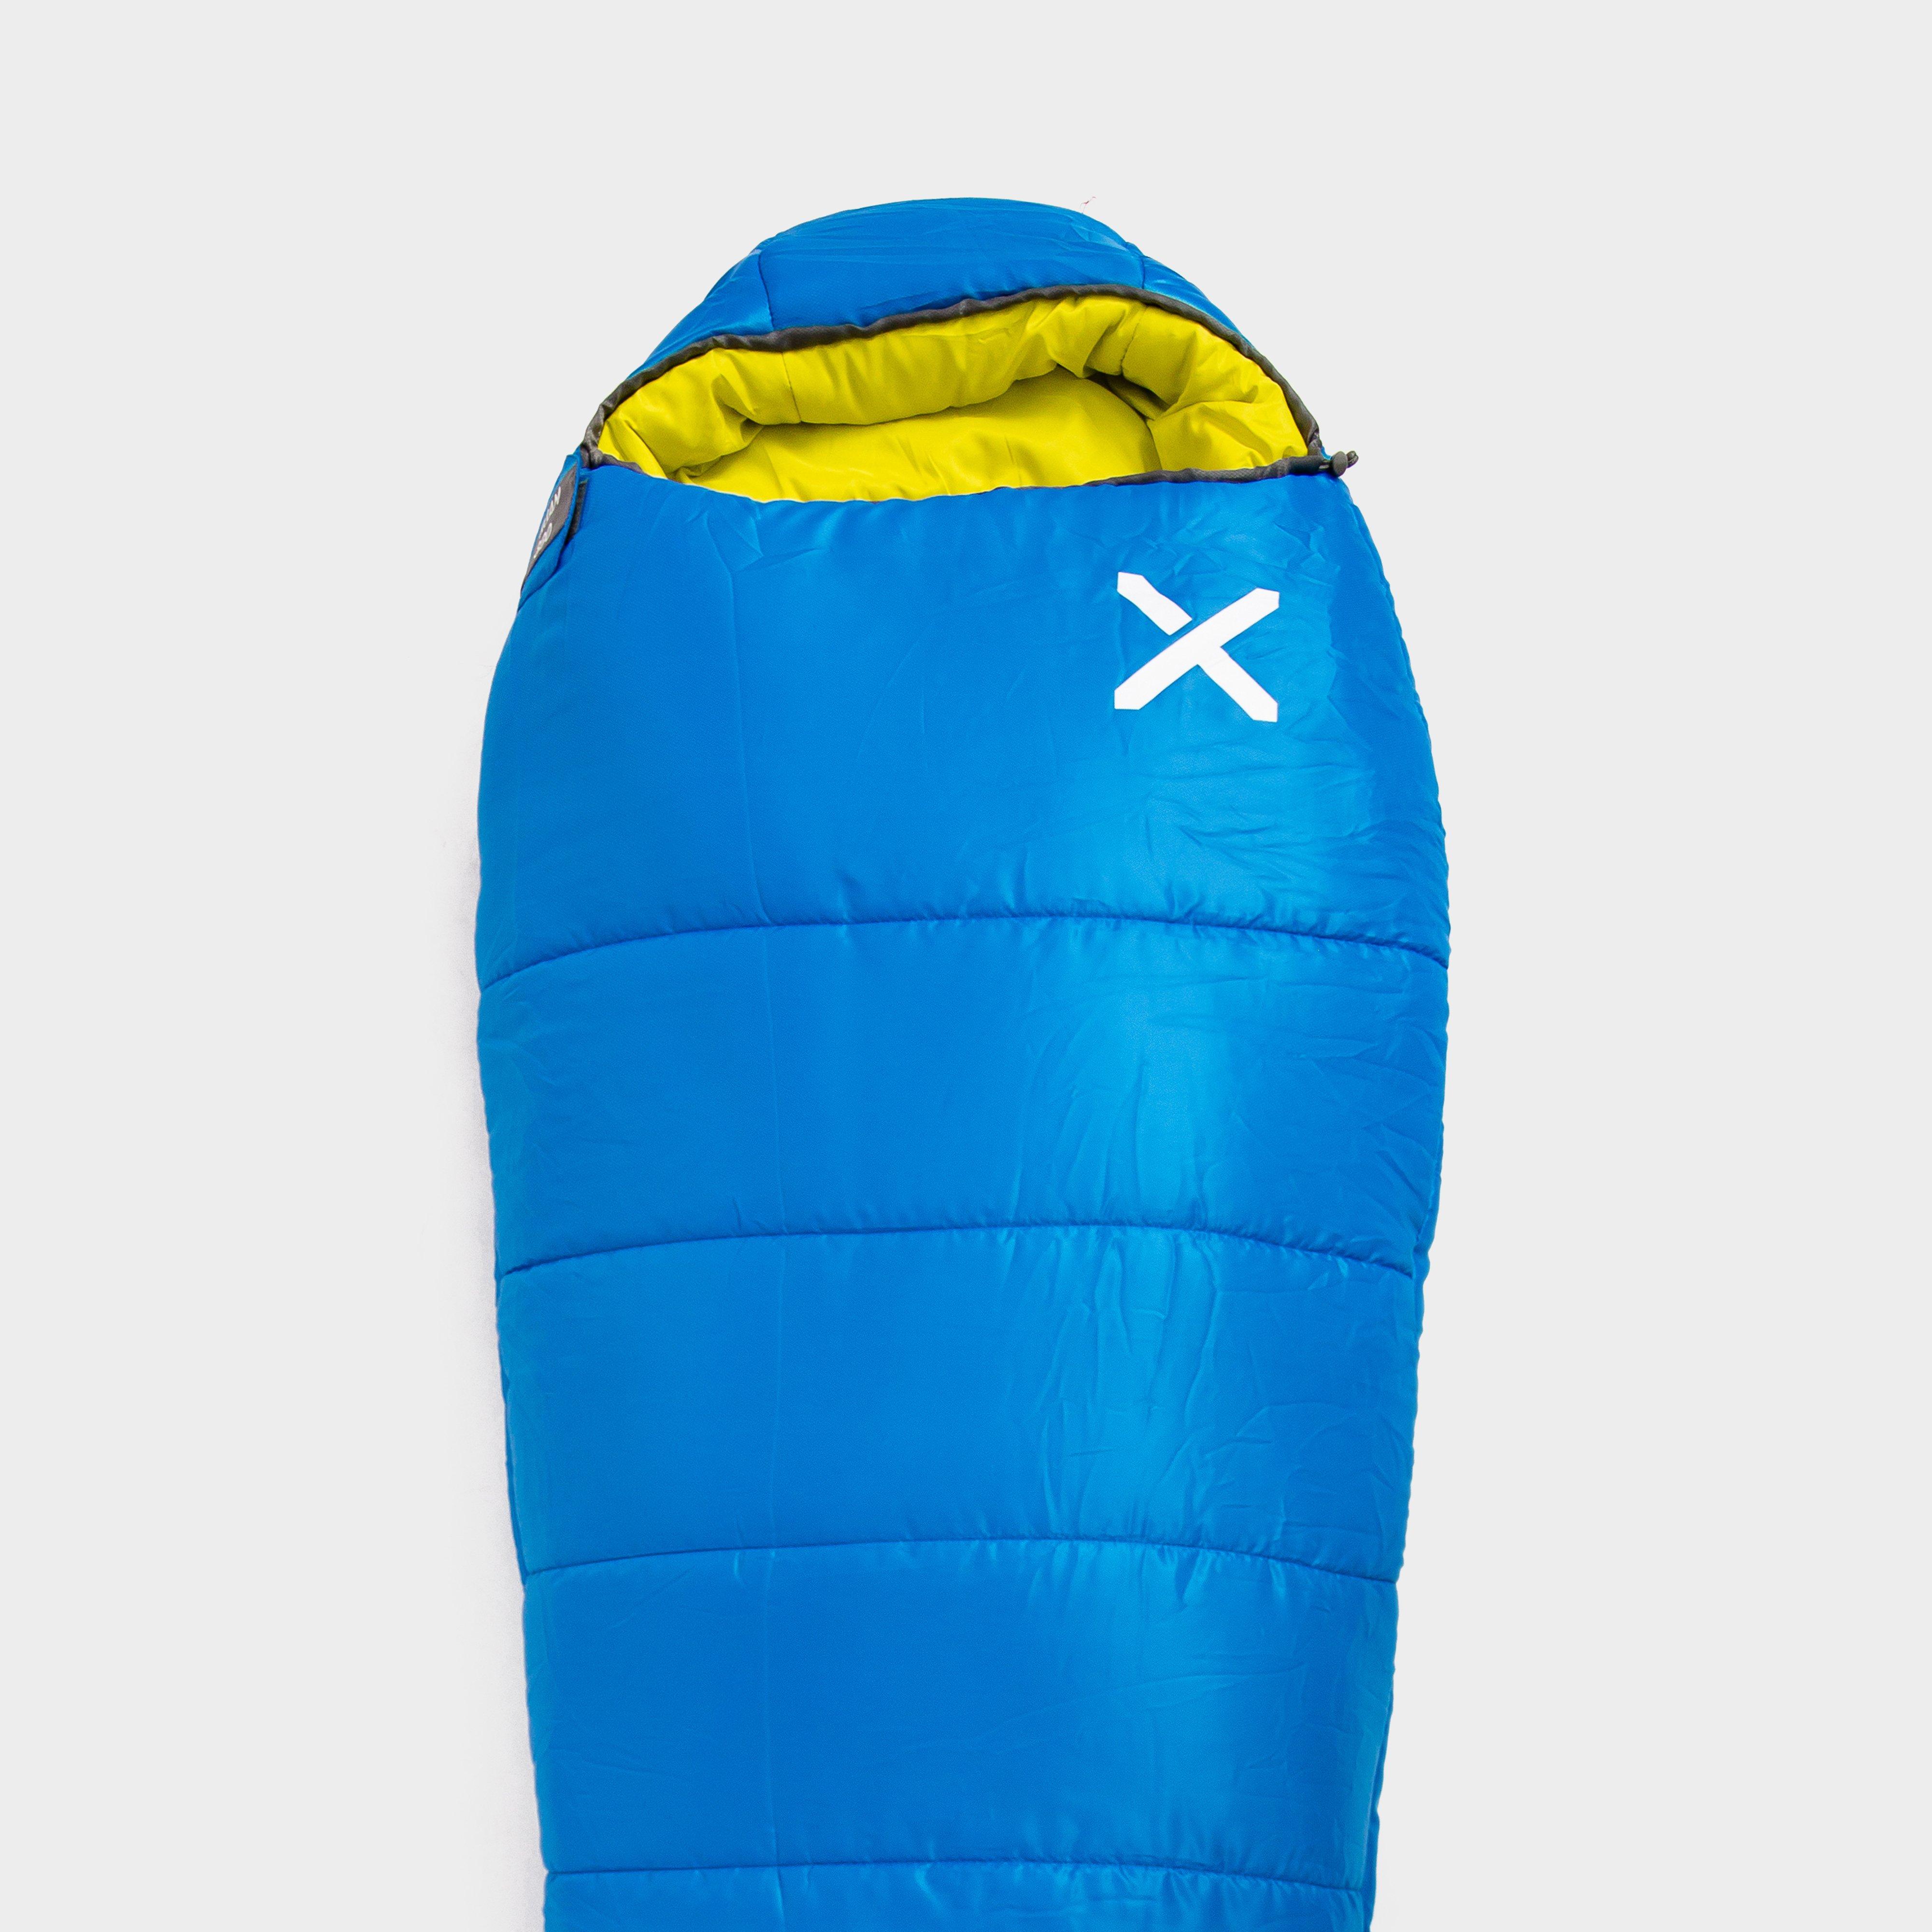  OEX Roam 300 Sleeping Bag, Blue